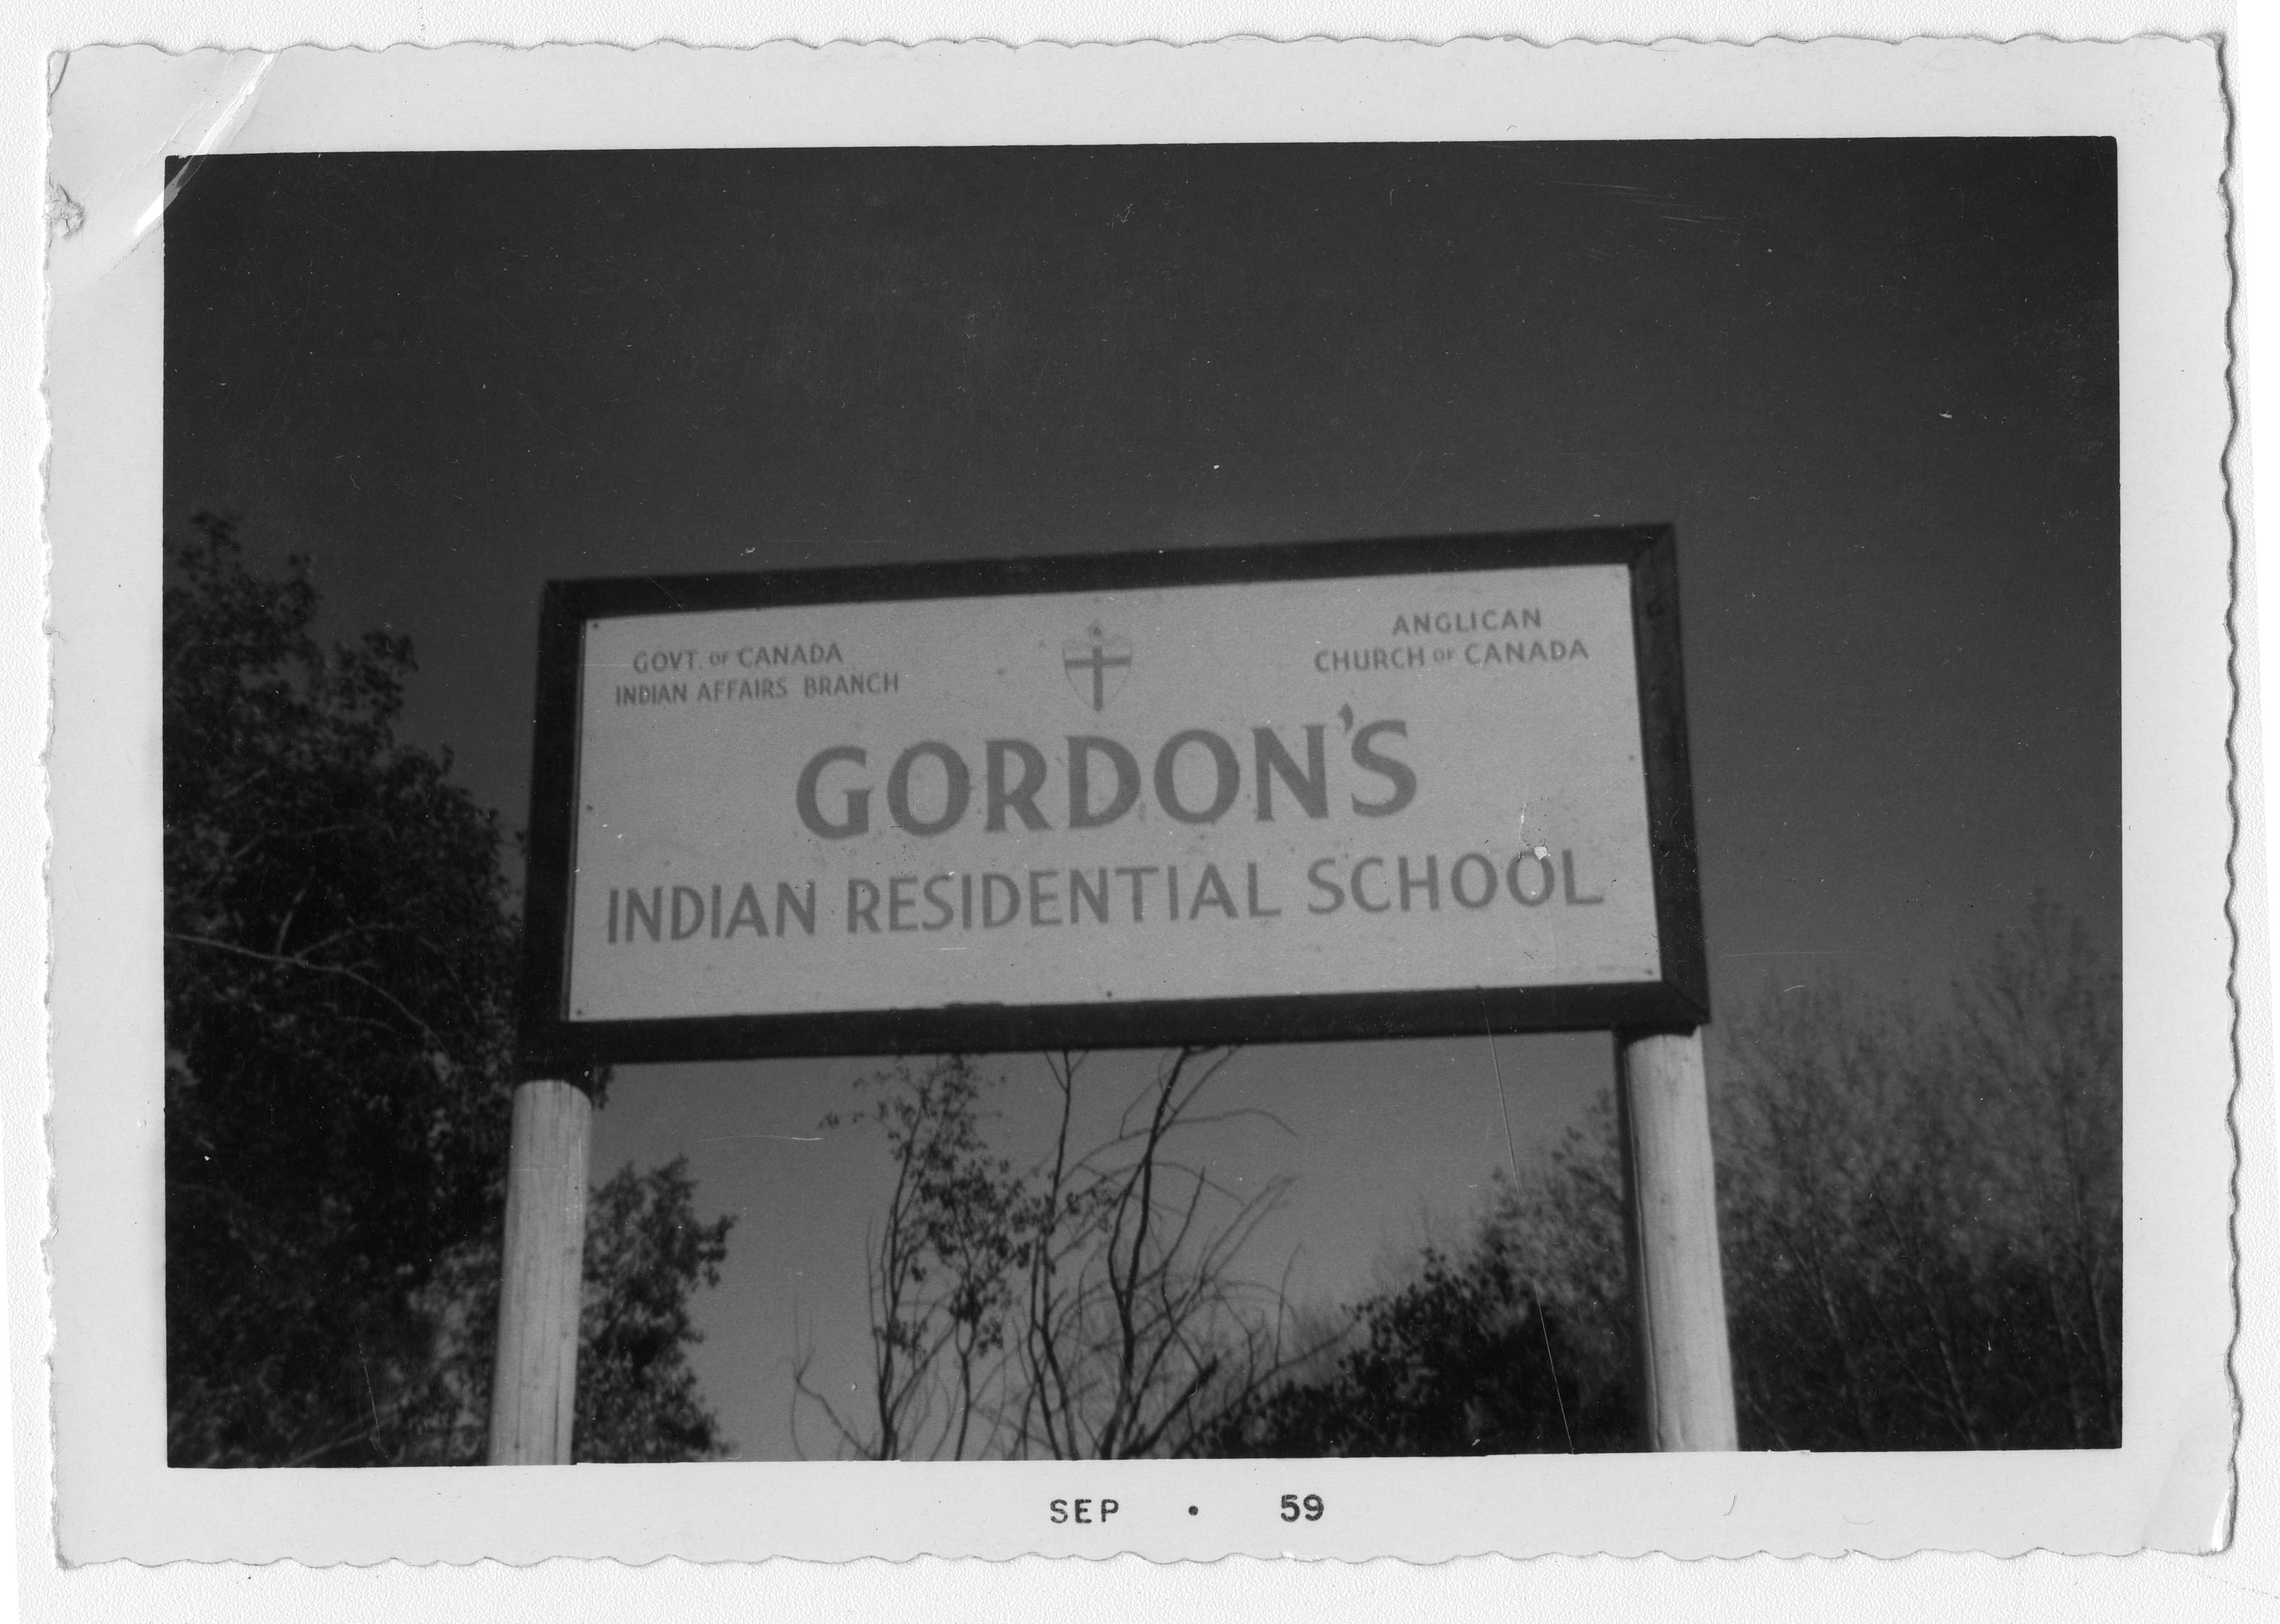 Gordon IRS sign